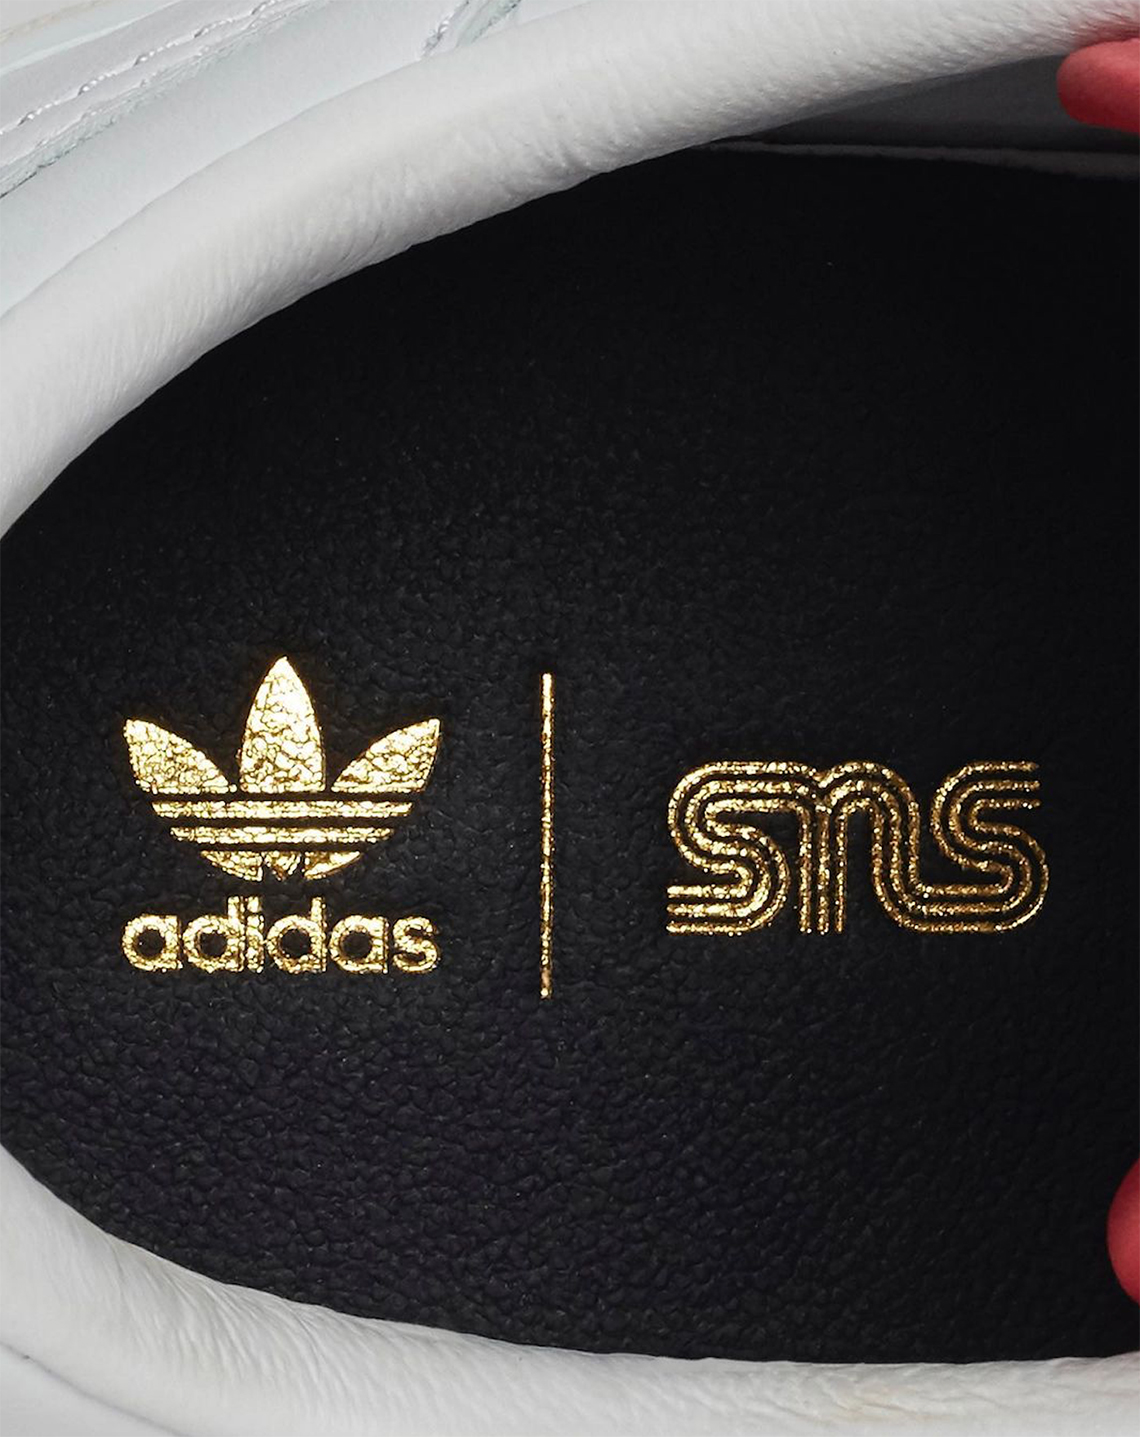 Sns Adidas Forum Low Teaser 2